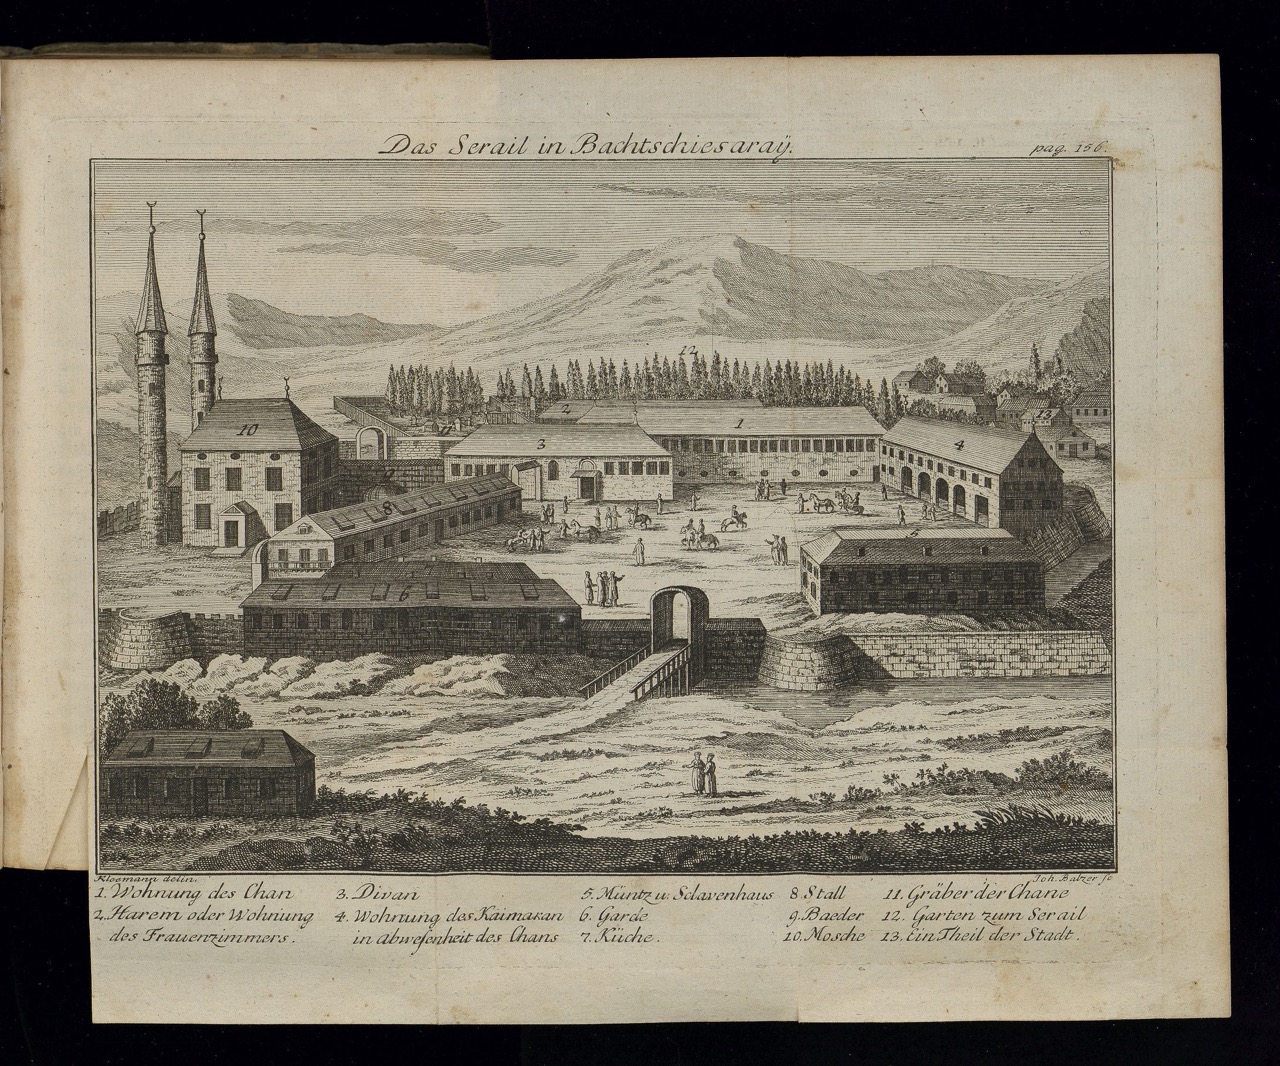 Kleemann: Tagebuch 1783, "Das Serail in Bachtschiesaray"